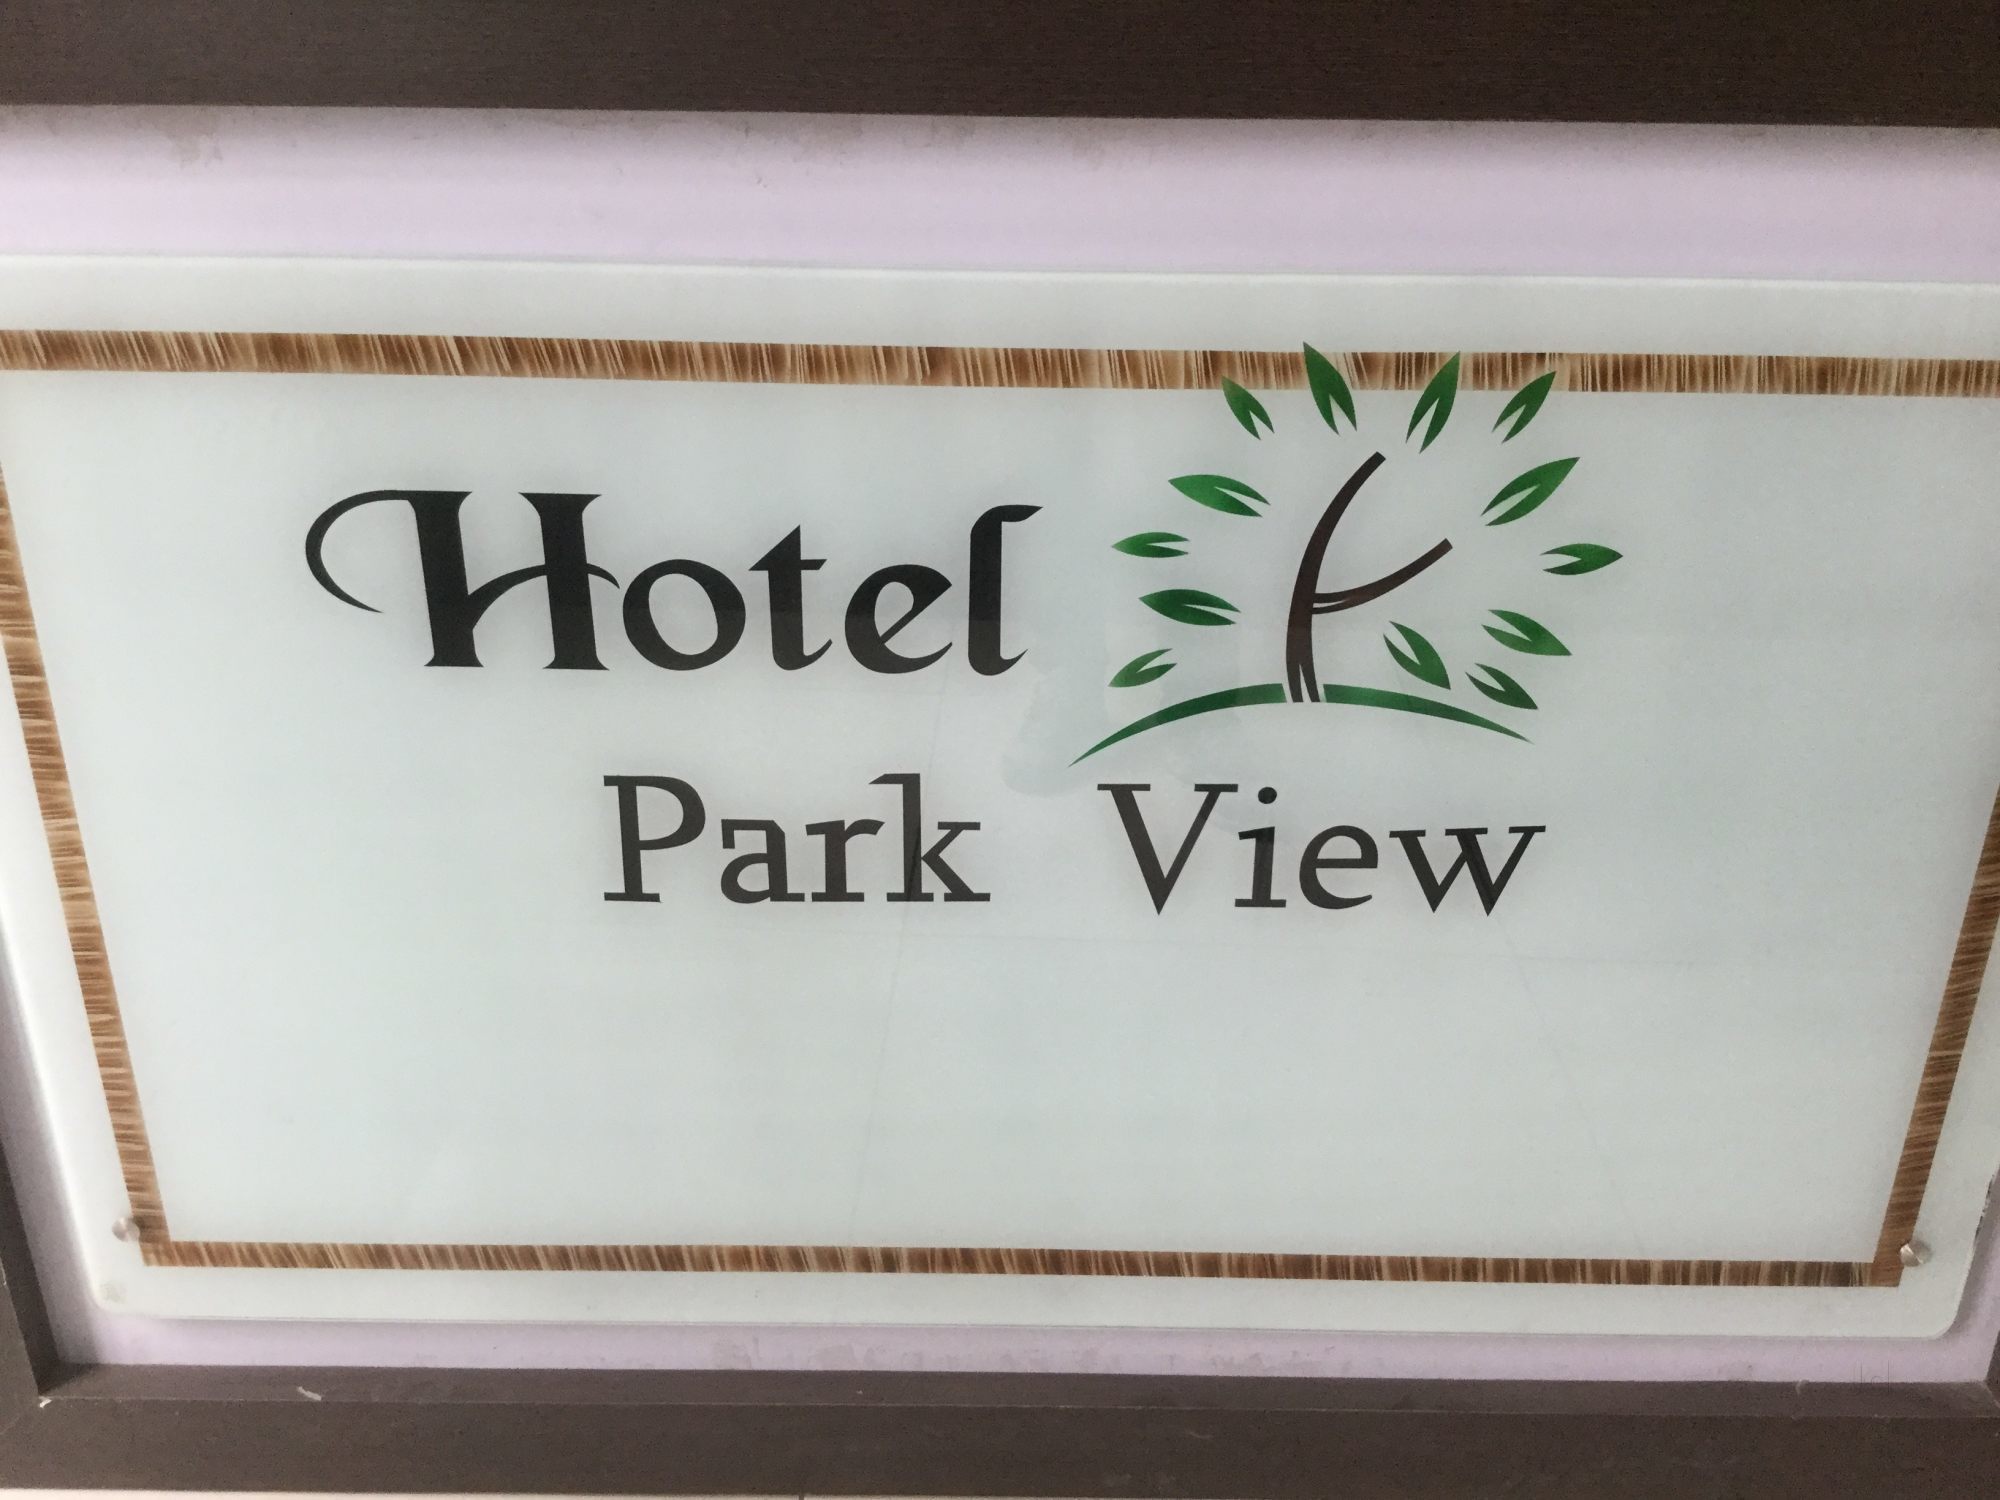 Hotel Park View|Hotel|Accomodation